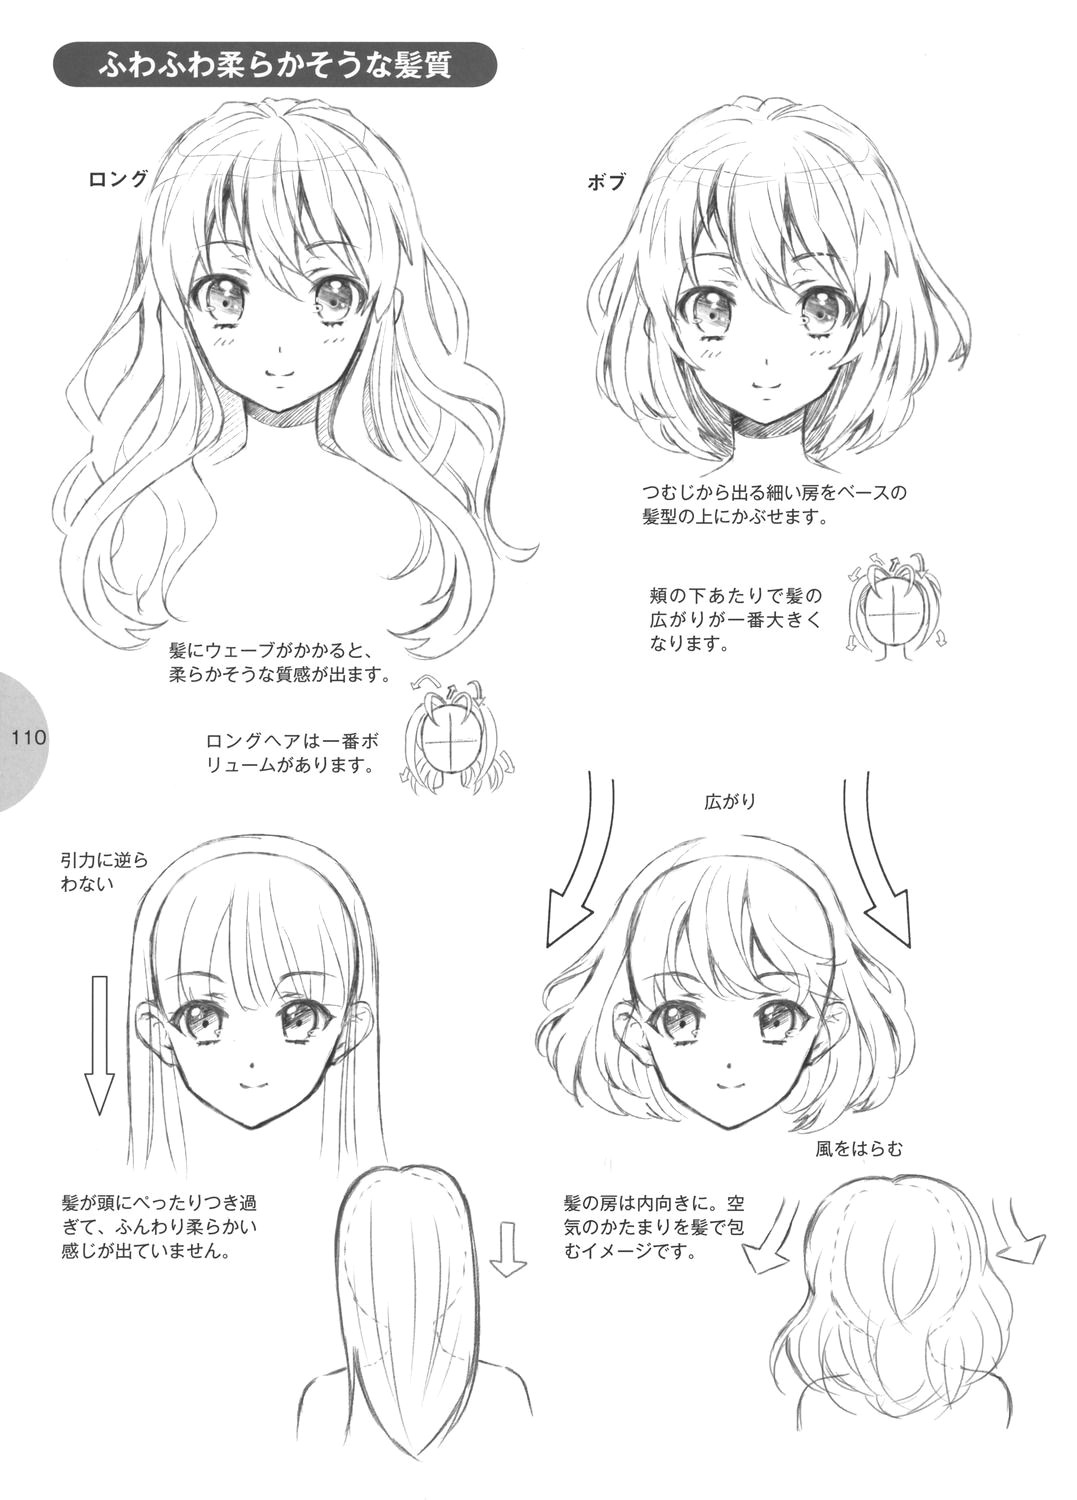 Learn Draw Anime Characters Tutorial Hair Manga Hair How to Draw Hair Anime Hair